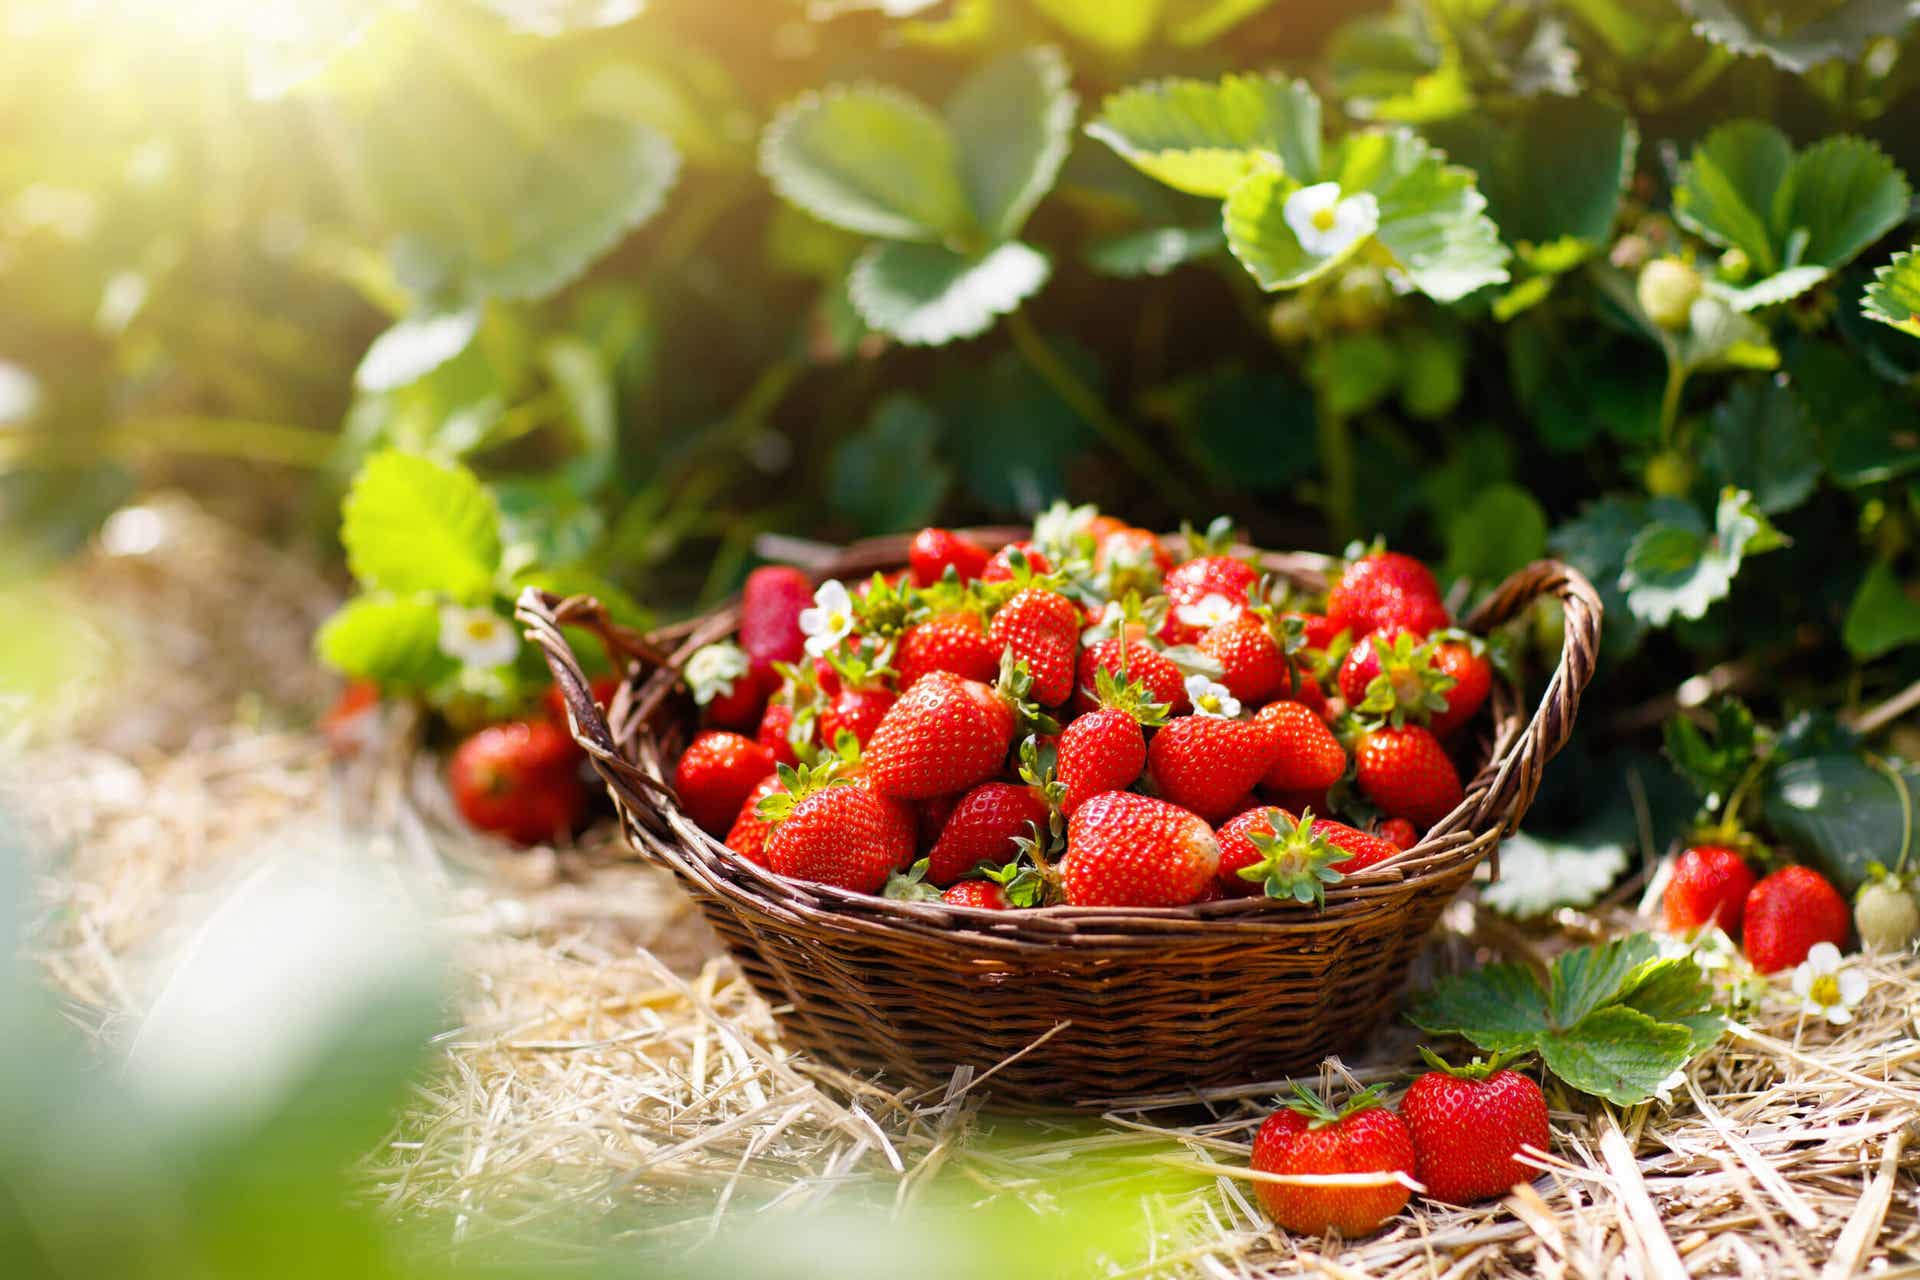 A basket of freshly picked strawberries.